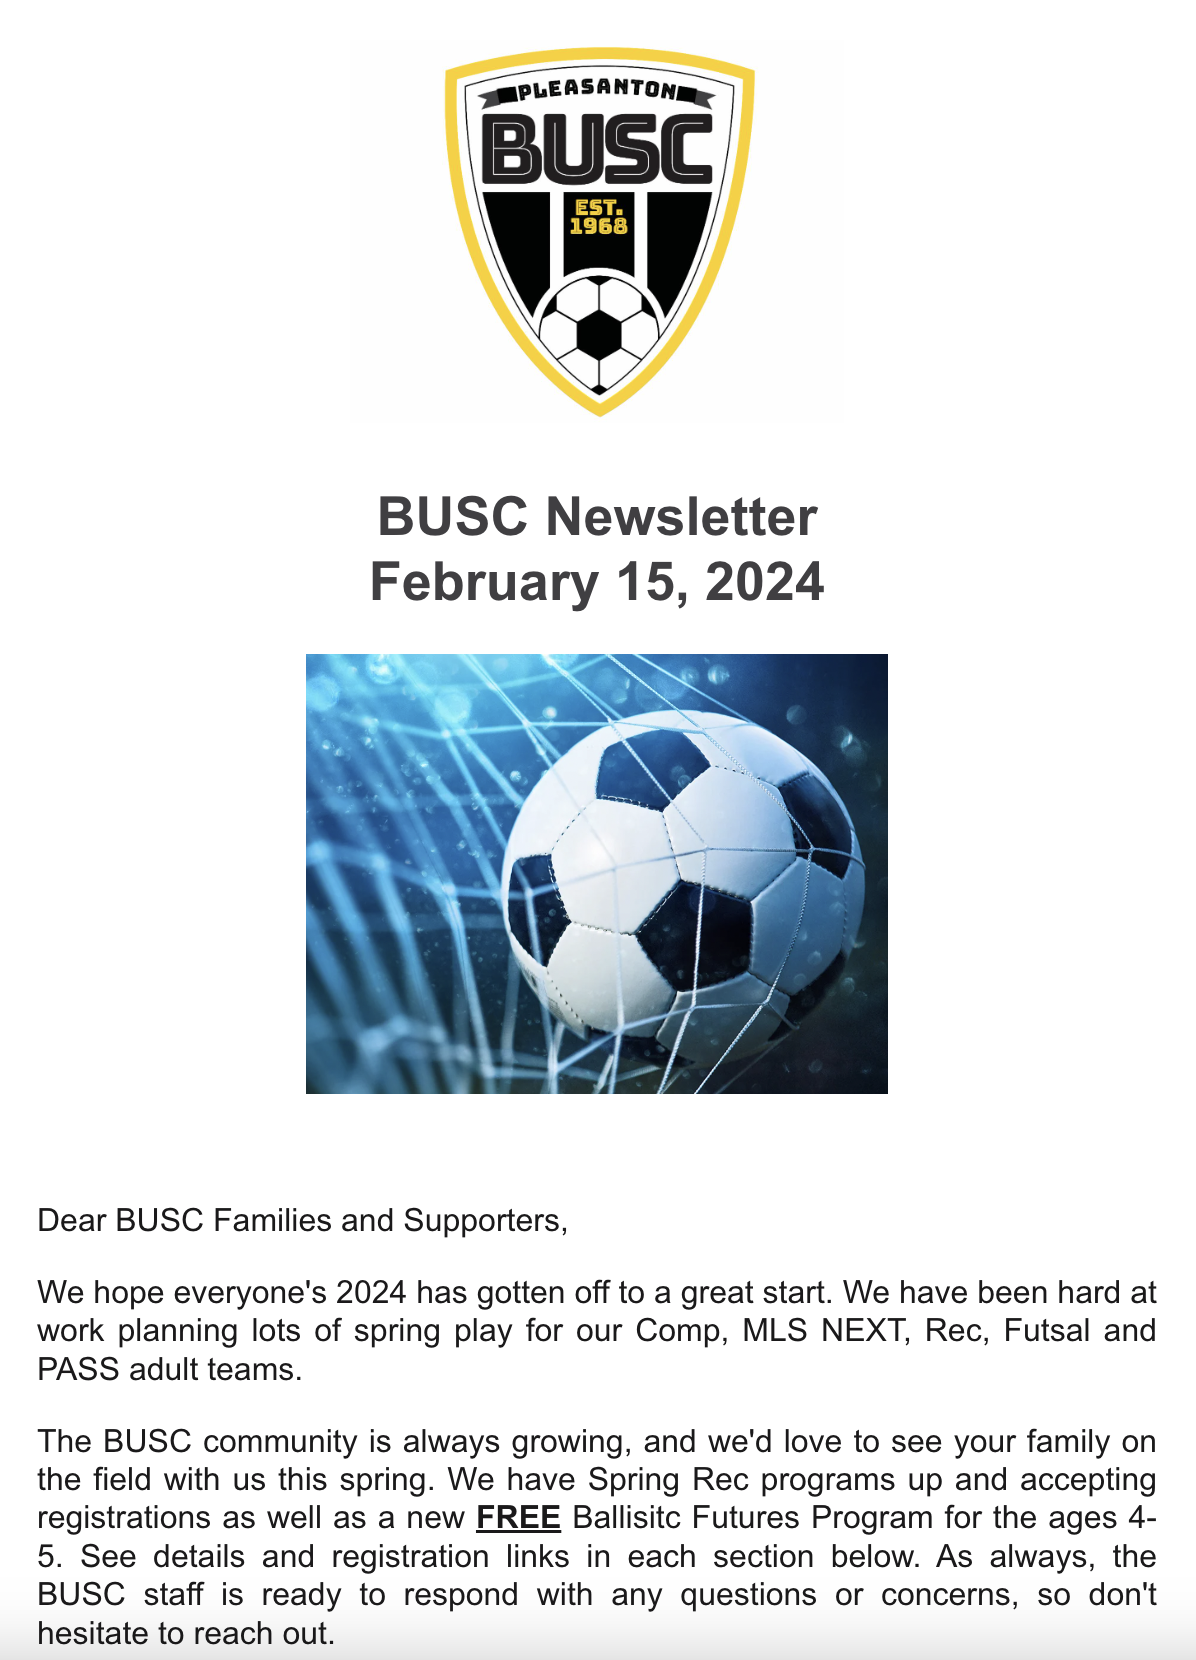 BUSC Feb. Newsletter Image